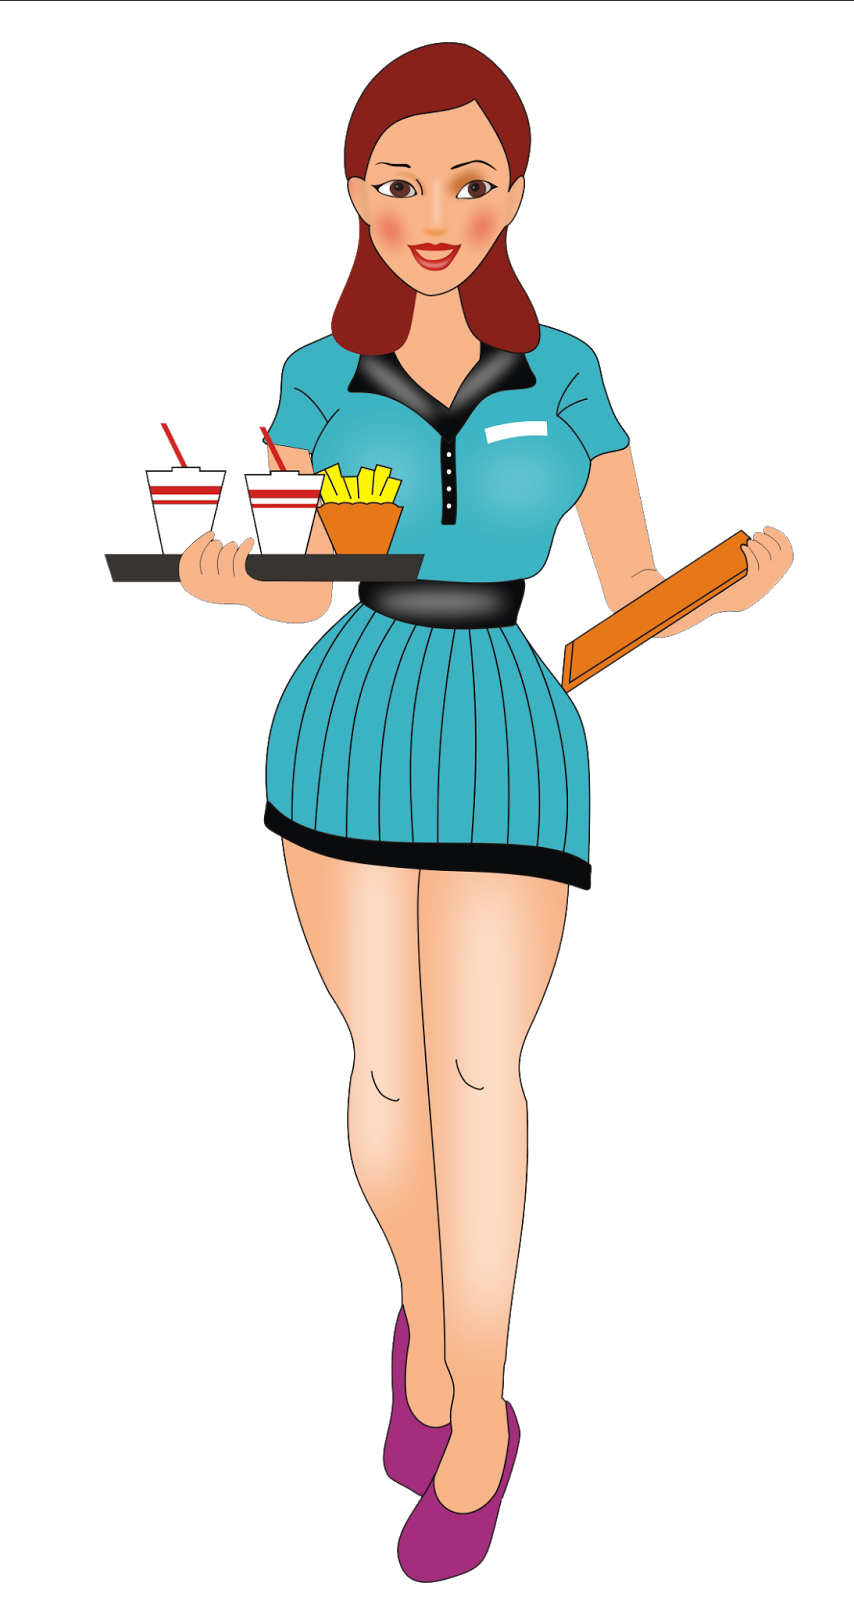 Waitress diner waitress